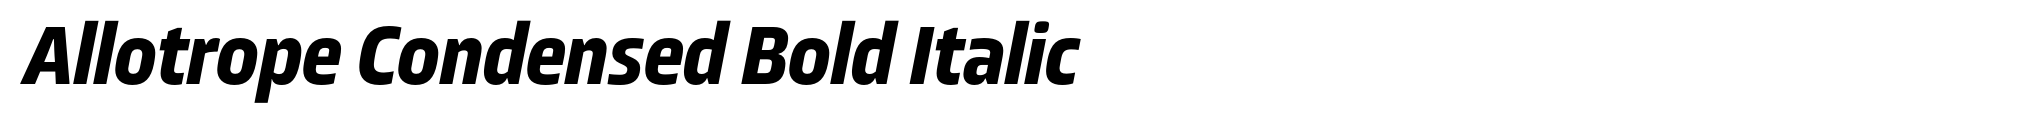 Allotrope Condensed Bold Italic image